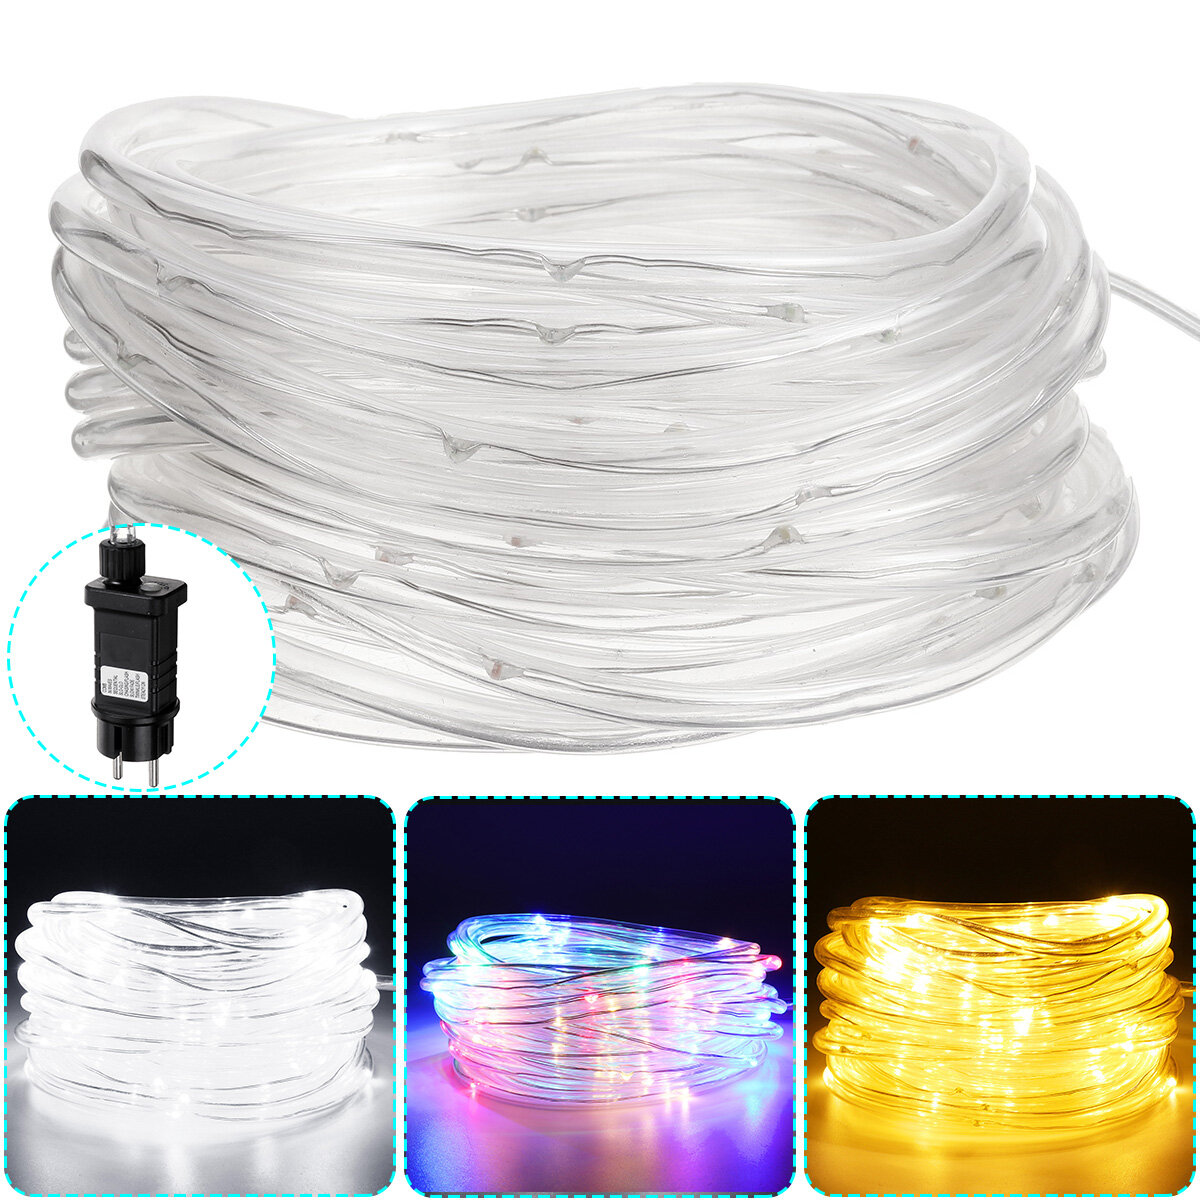 10M 100LED Outdoor Tube Rope Strip String Light RGB Lamp Xmas Home Decor Lights met EU Plug